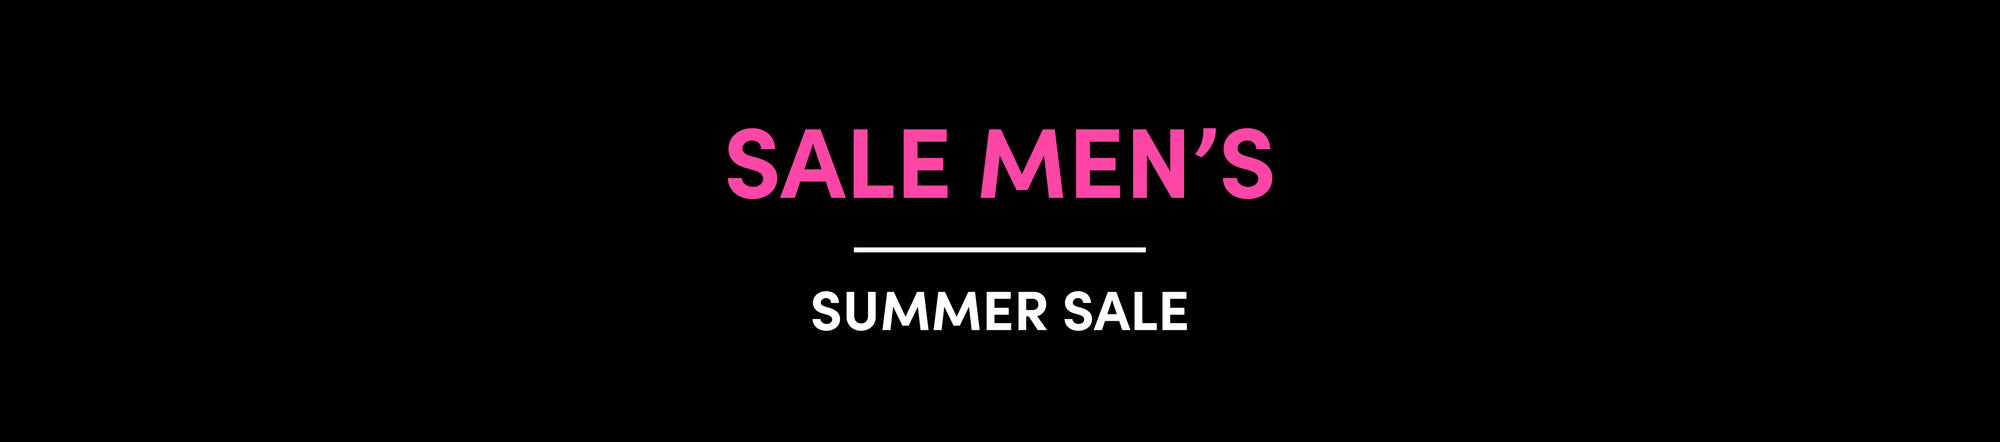 Sale Men's Summer Sale